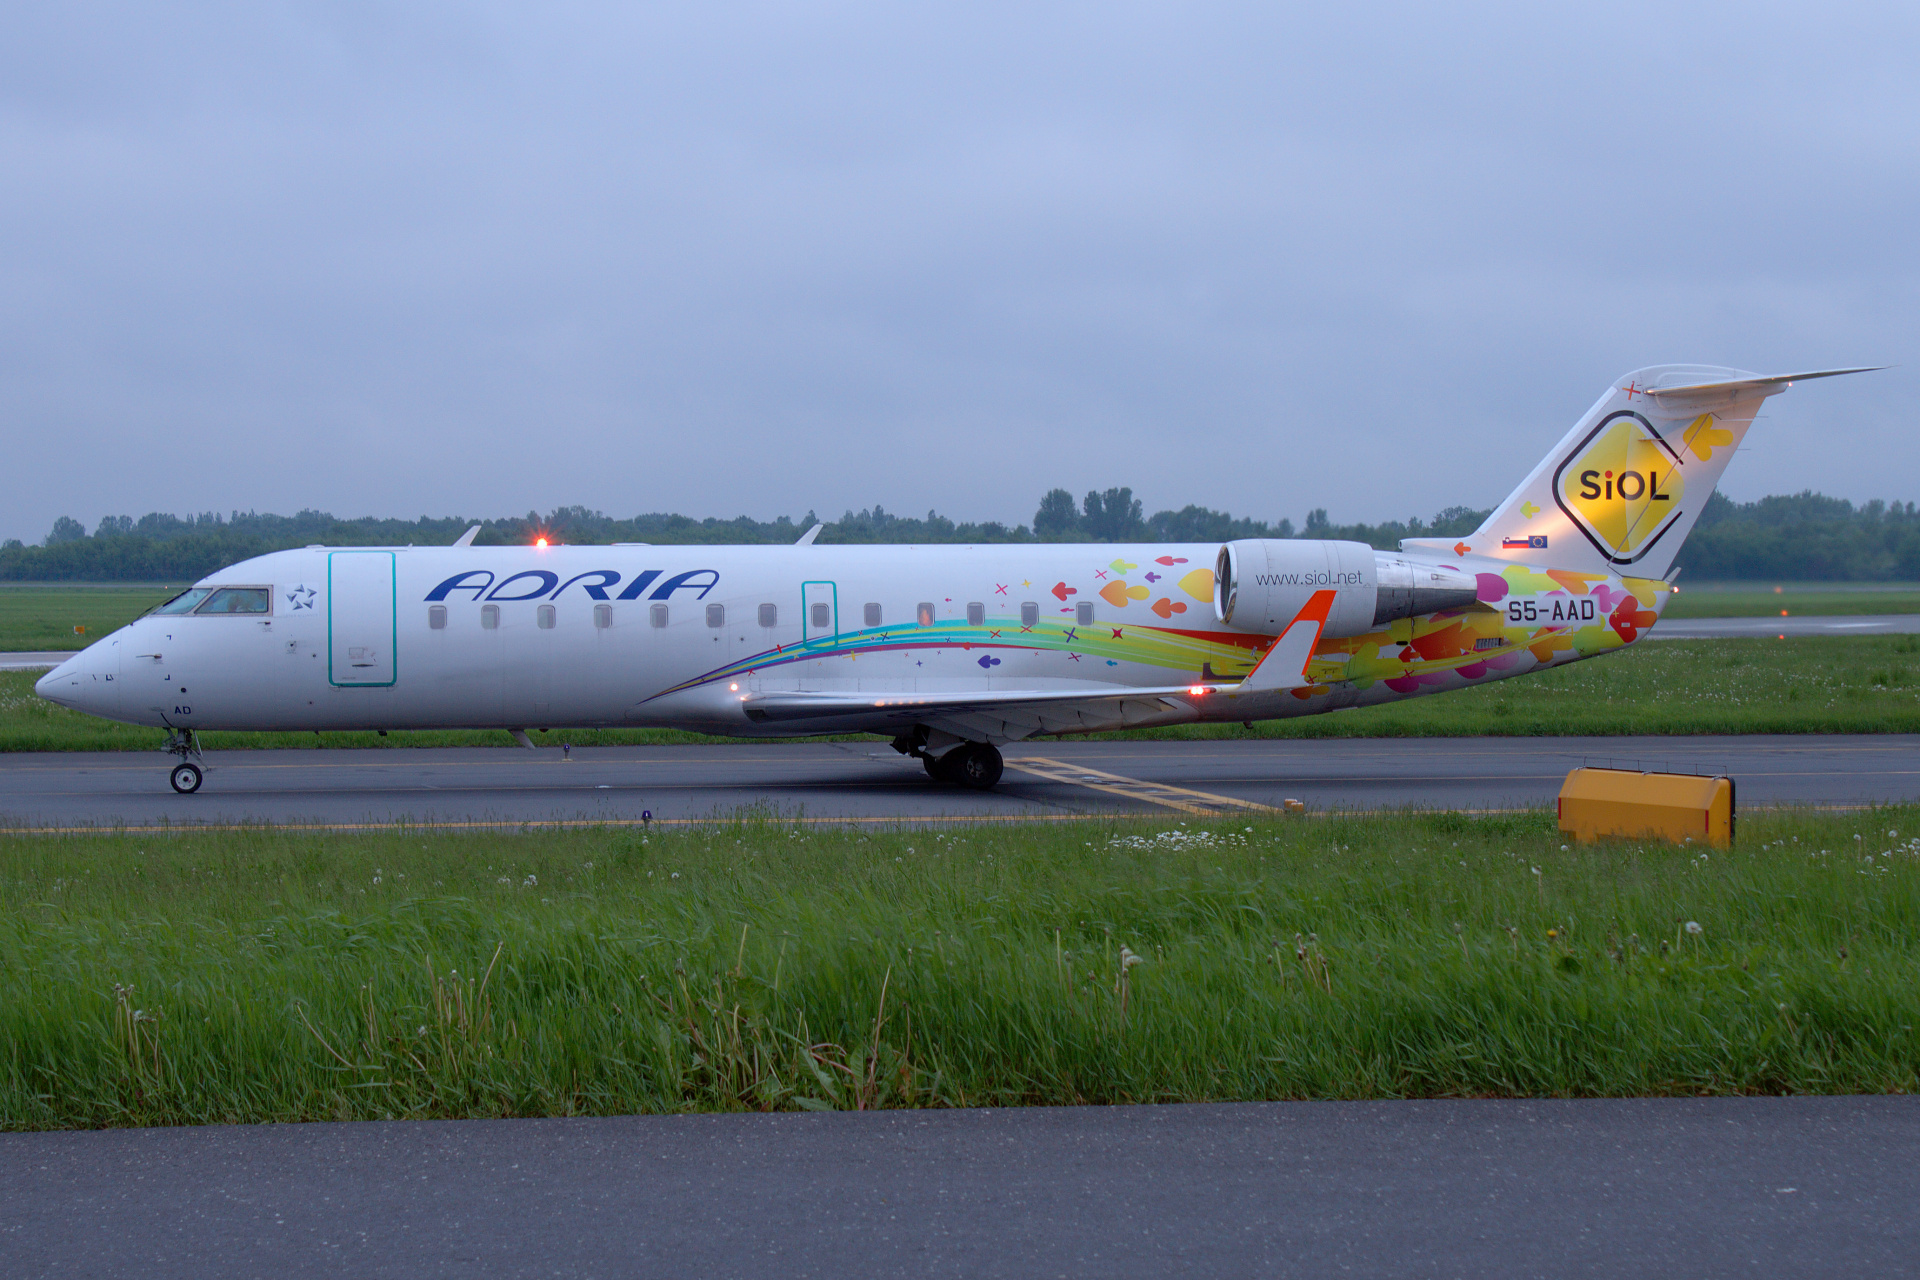 S5-AAD (Siol livery) (Aircraft » EPWA Spotting » Bombardier CL-600 Regional Jet » CRJ-200 » Adria Airways)